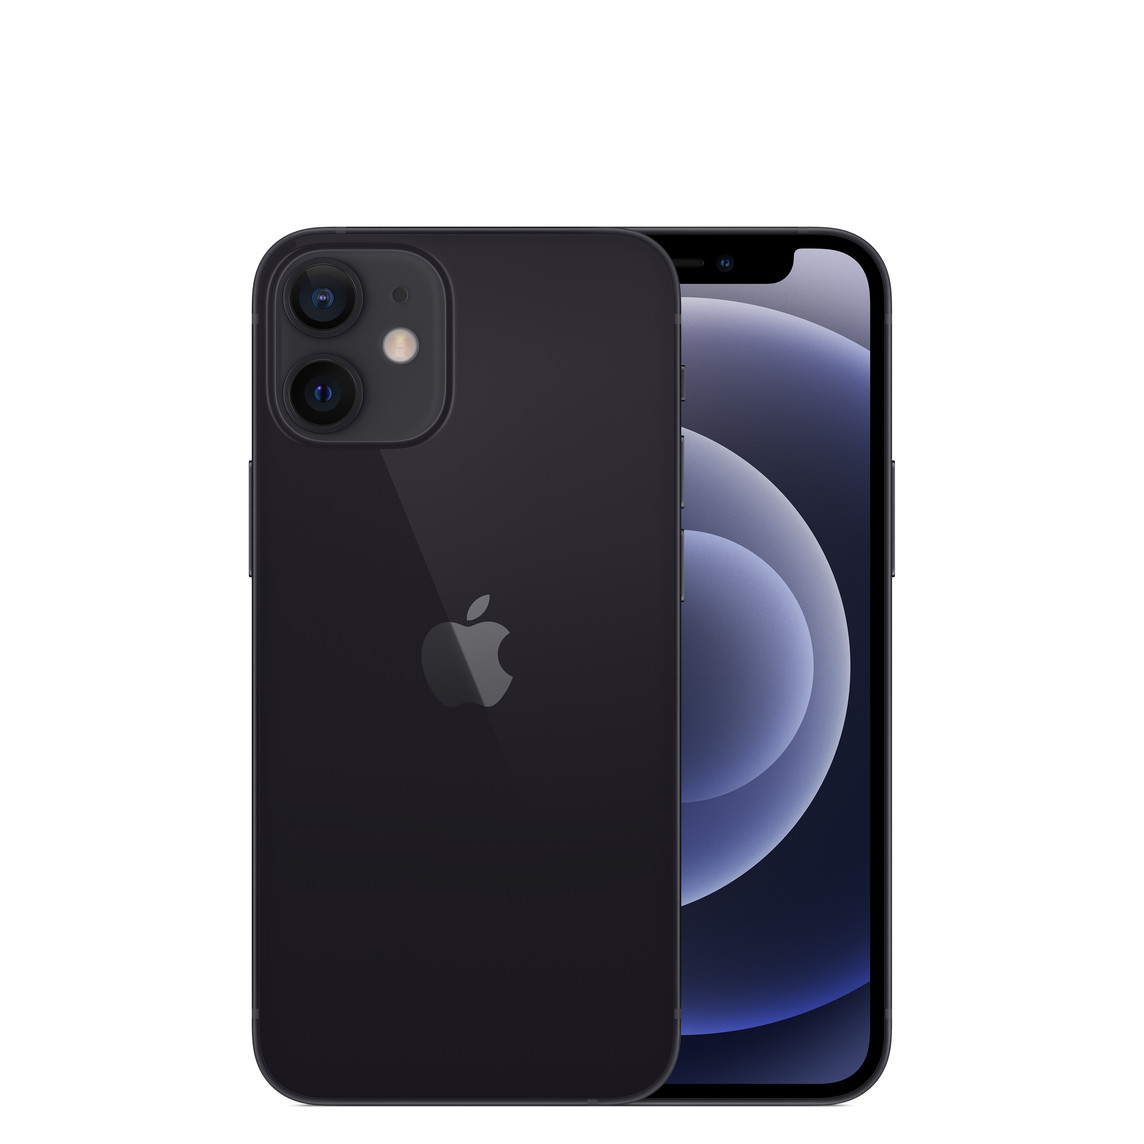 Apple iPhone 12 mini 64GB 5,4" (A2176 / 2020) 5G black ohne Simlock hervorrgend